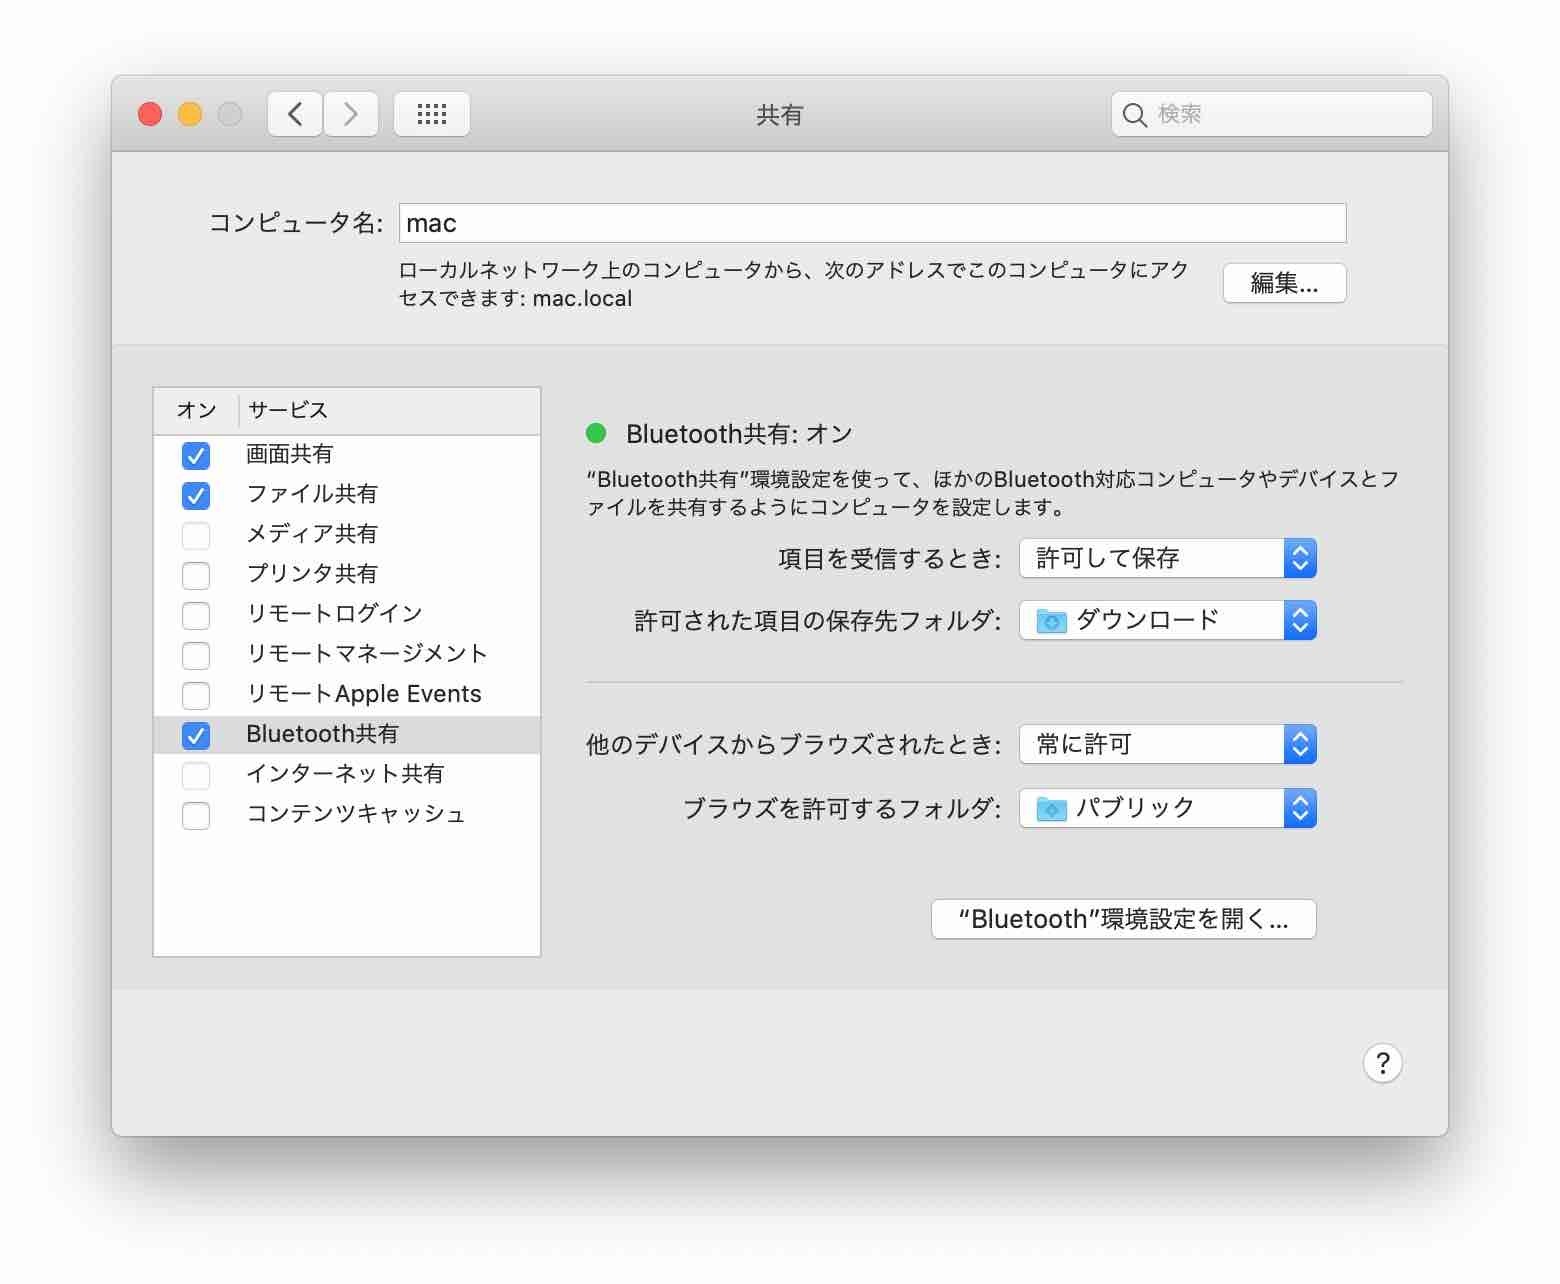 mac-sharing-bluetooth-image.jpg